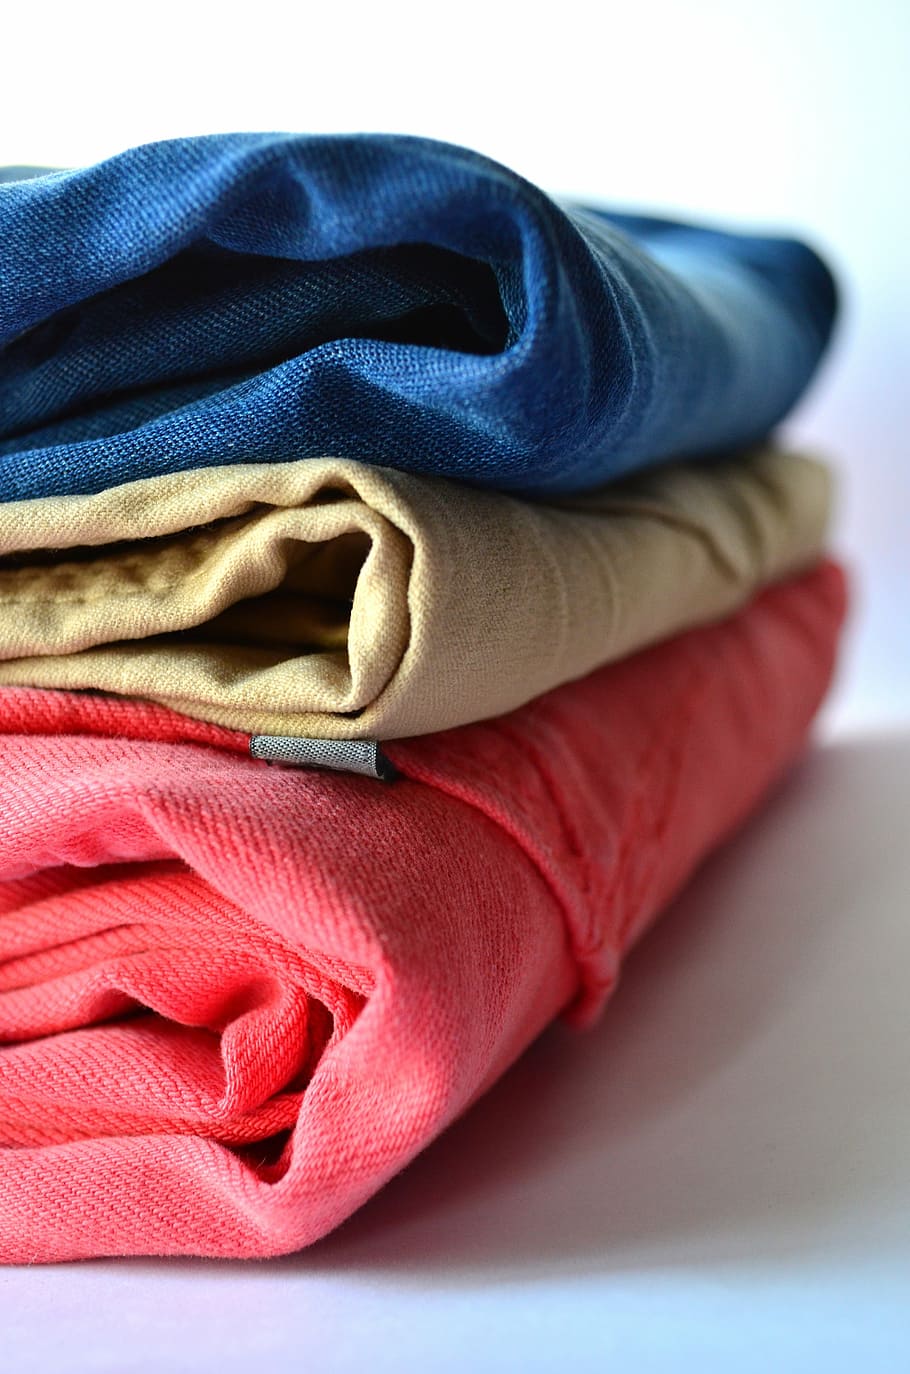 tiga, denim, putih, permukaan, pakaian, celana, tumpukan, pink, biru, jeans